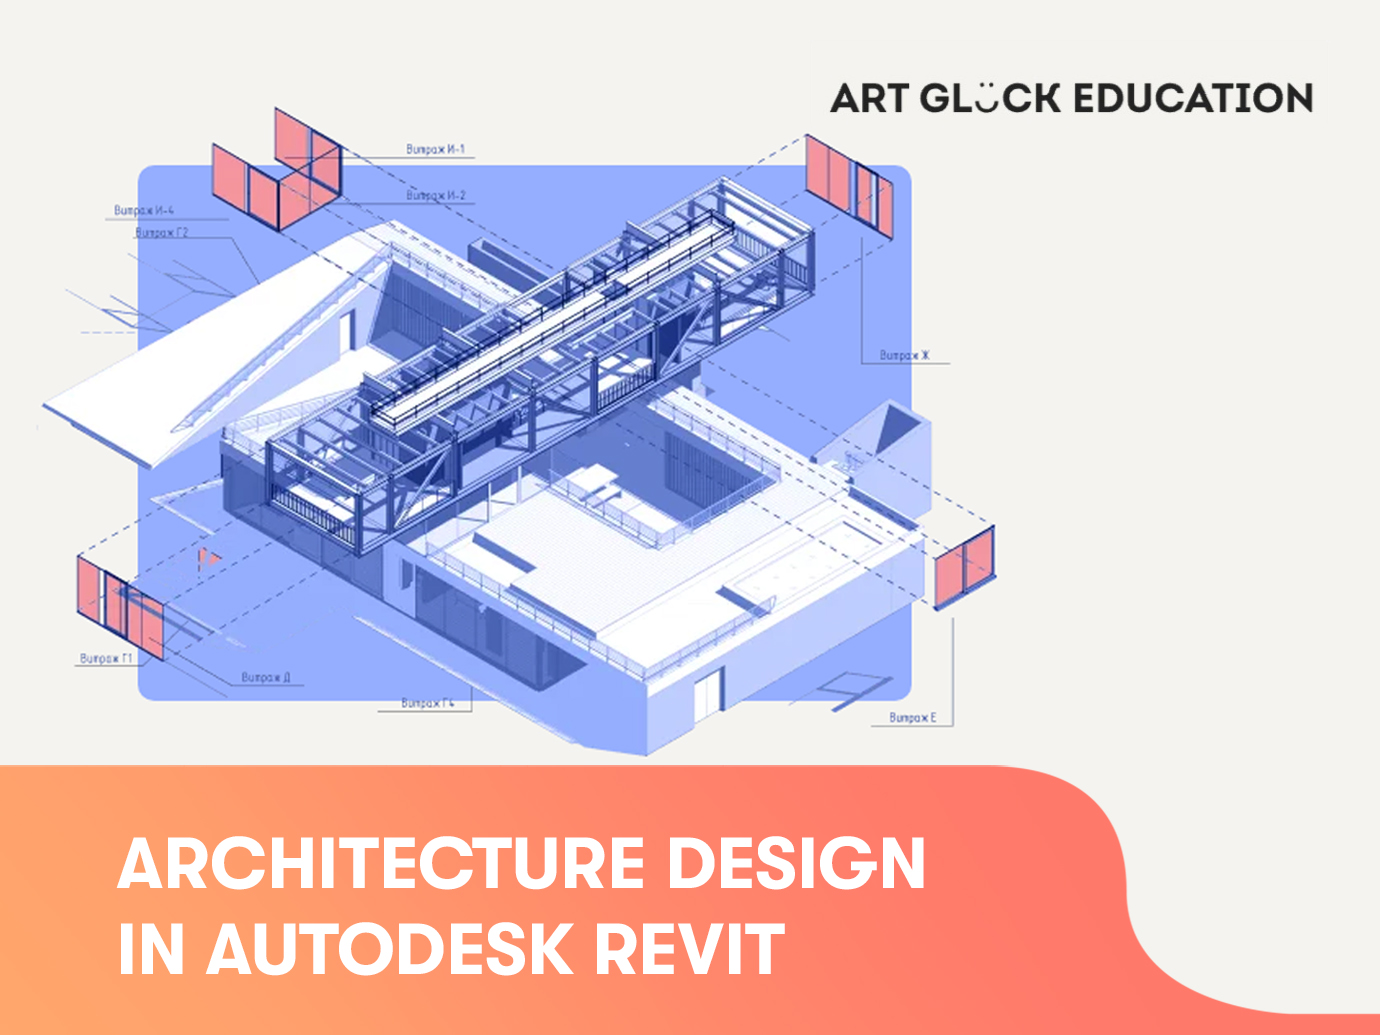 ARCHITECTURE DESIGN IN AUTODESK REVIT